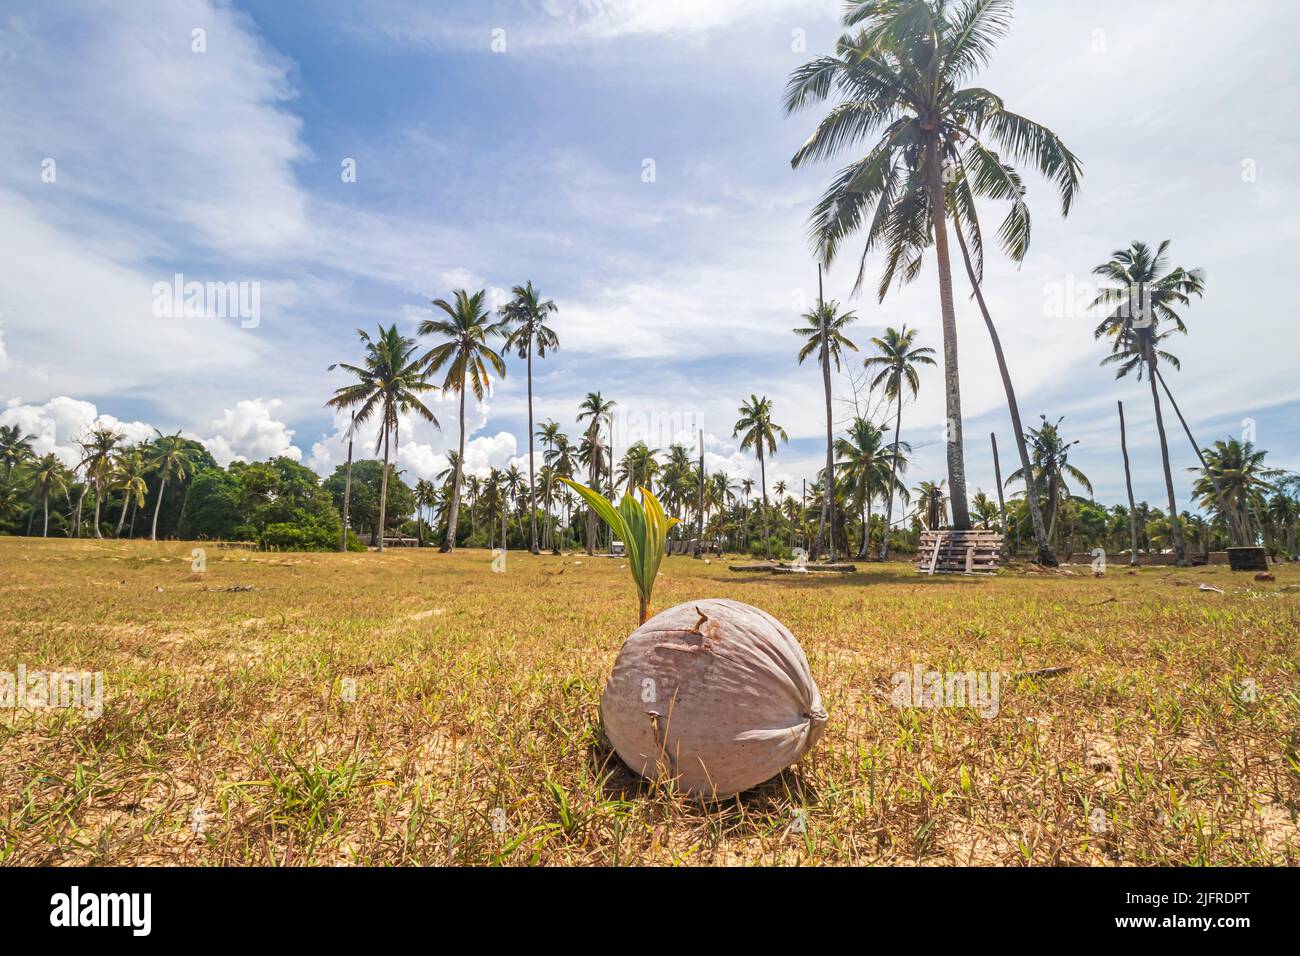 An abandon coconut drupe on deserted, dried grassy field with sapling sprouting out at Kampung Jambu Bongkok, in Terengganu, Malaysia. Stock Photo